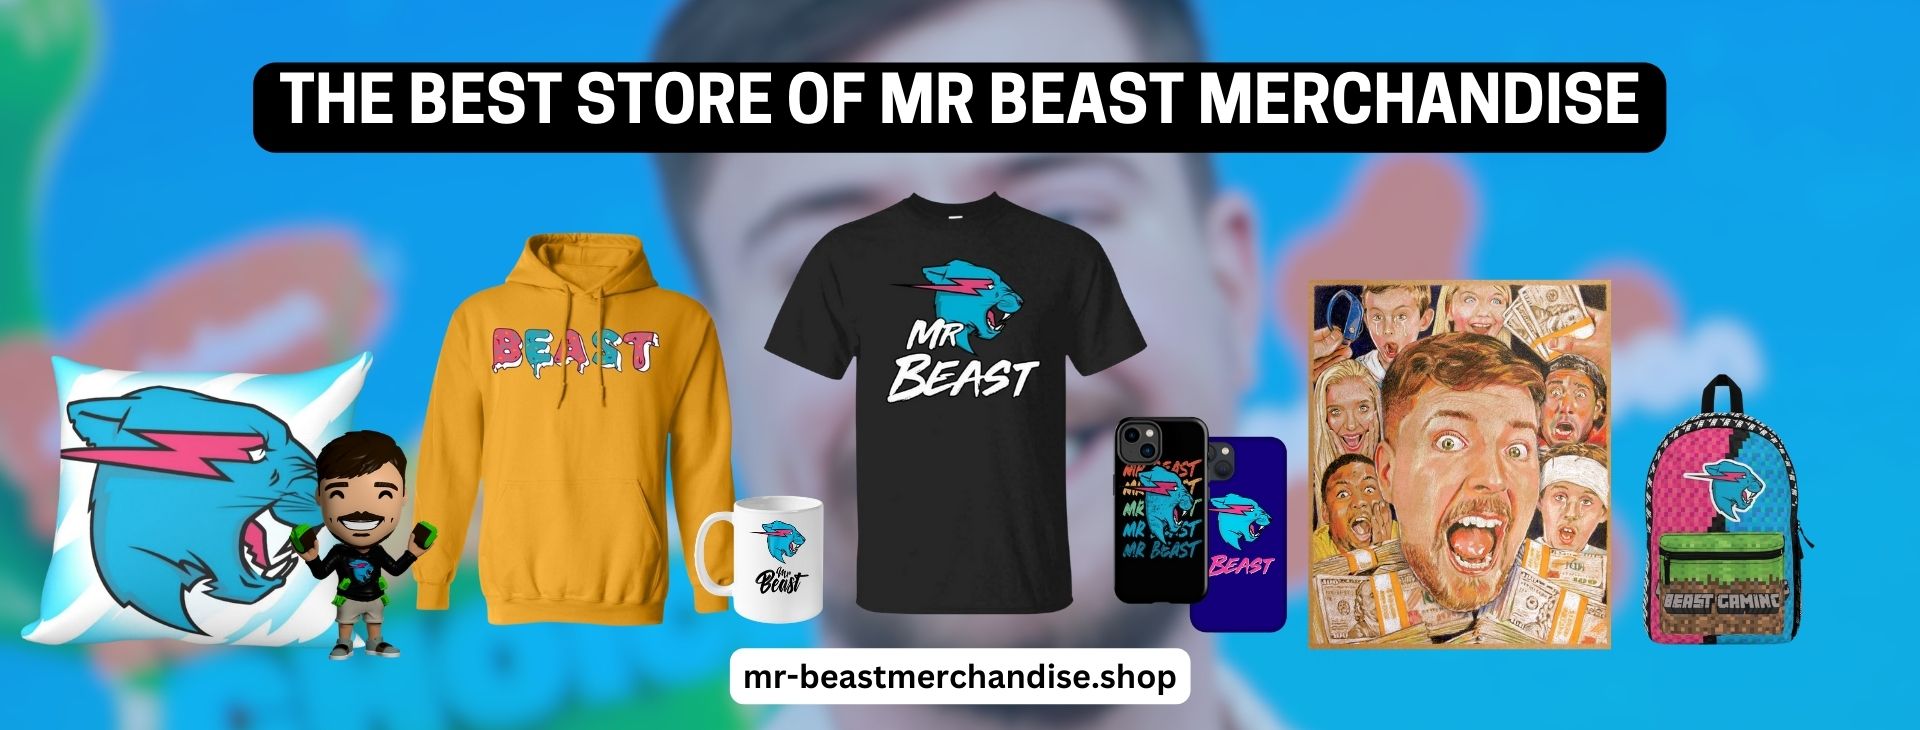 - MrBeast Shop